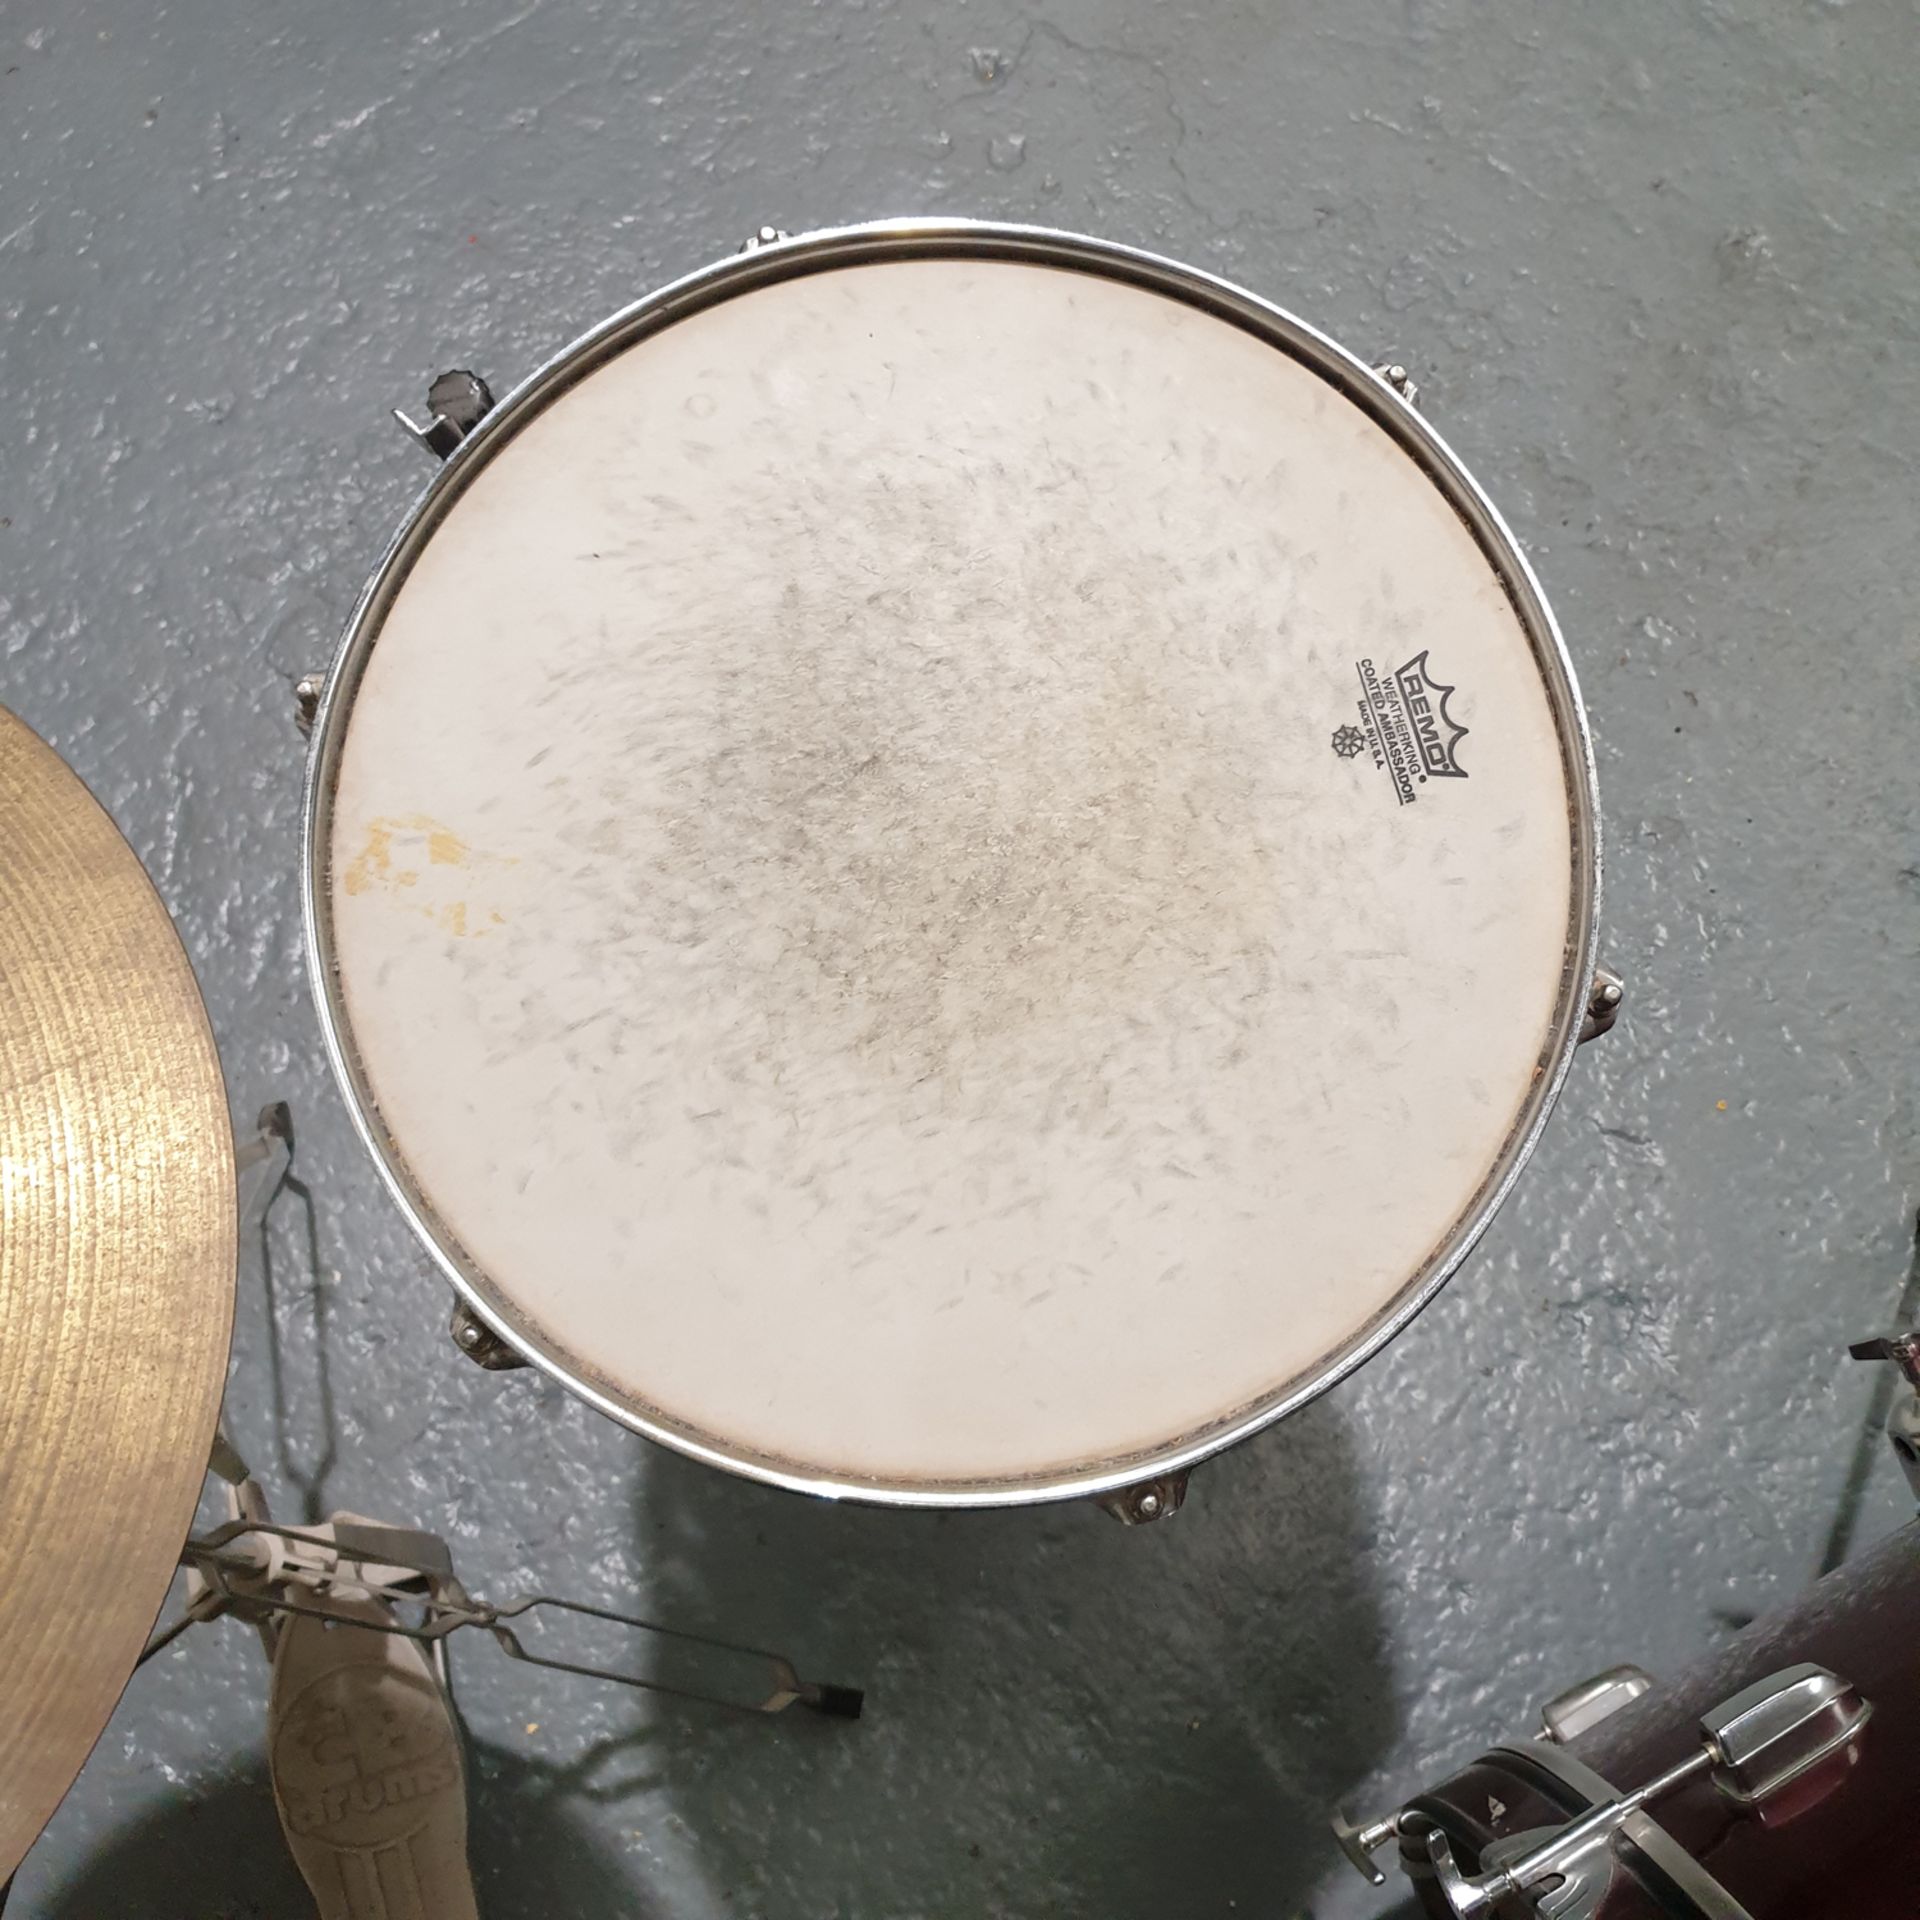 CB DRUMS Drum Set. 5 Drums and 2 Symbols. 1 Damaged Drum. - Image 10 of 10